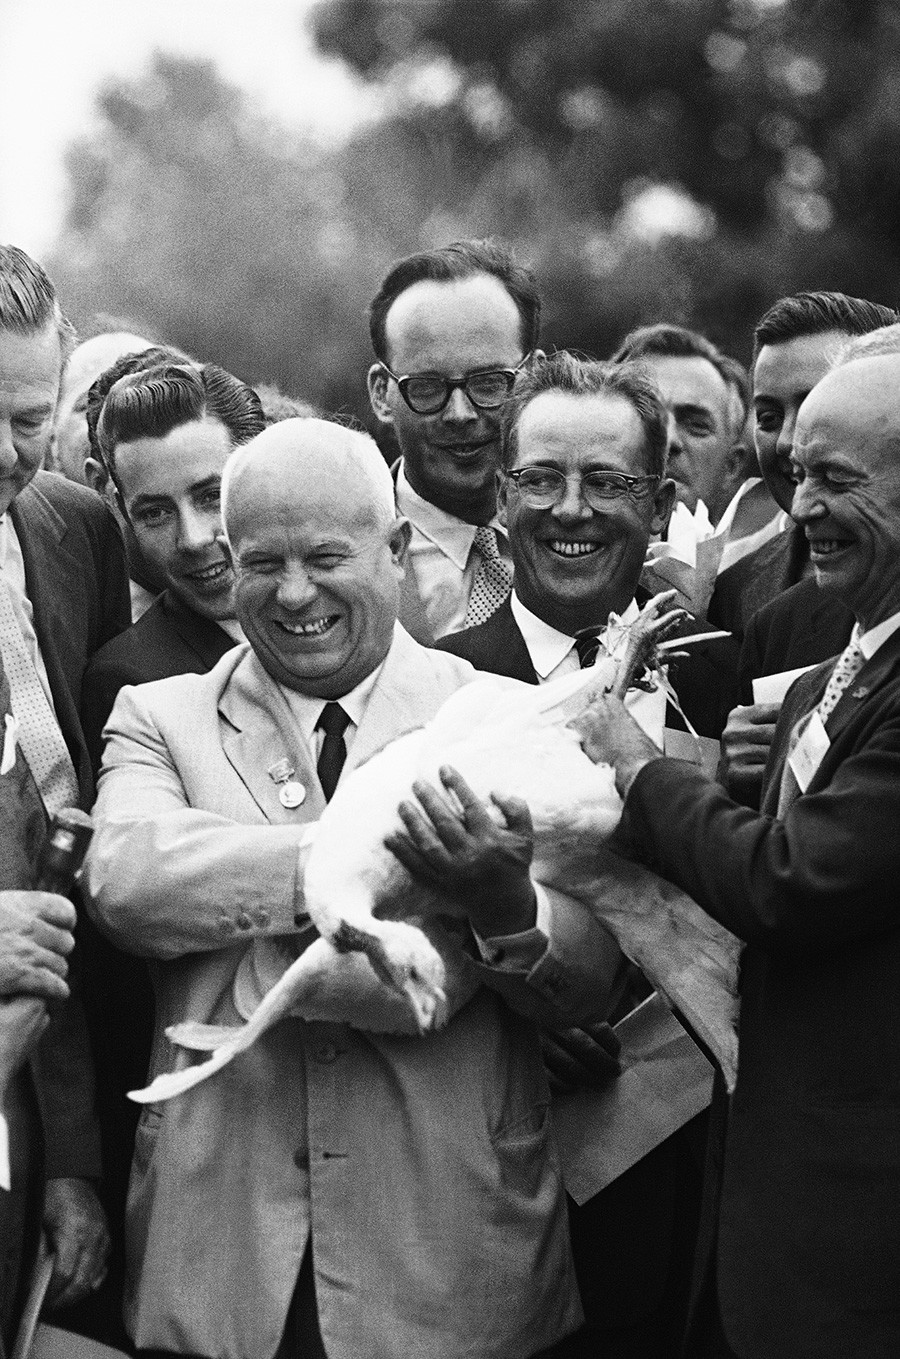 Pemimpin Soviet Nikita Khrushchev tersenyum ketika ia memegang seekor kalkun putih besar pada 16 September 1959 di Beltsville, Maryland, AS.